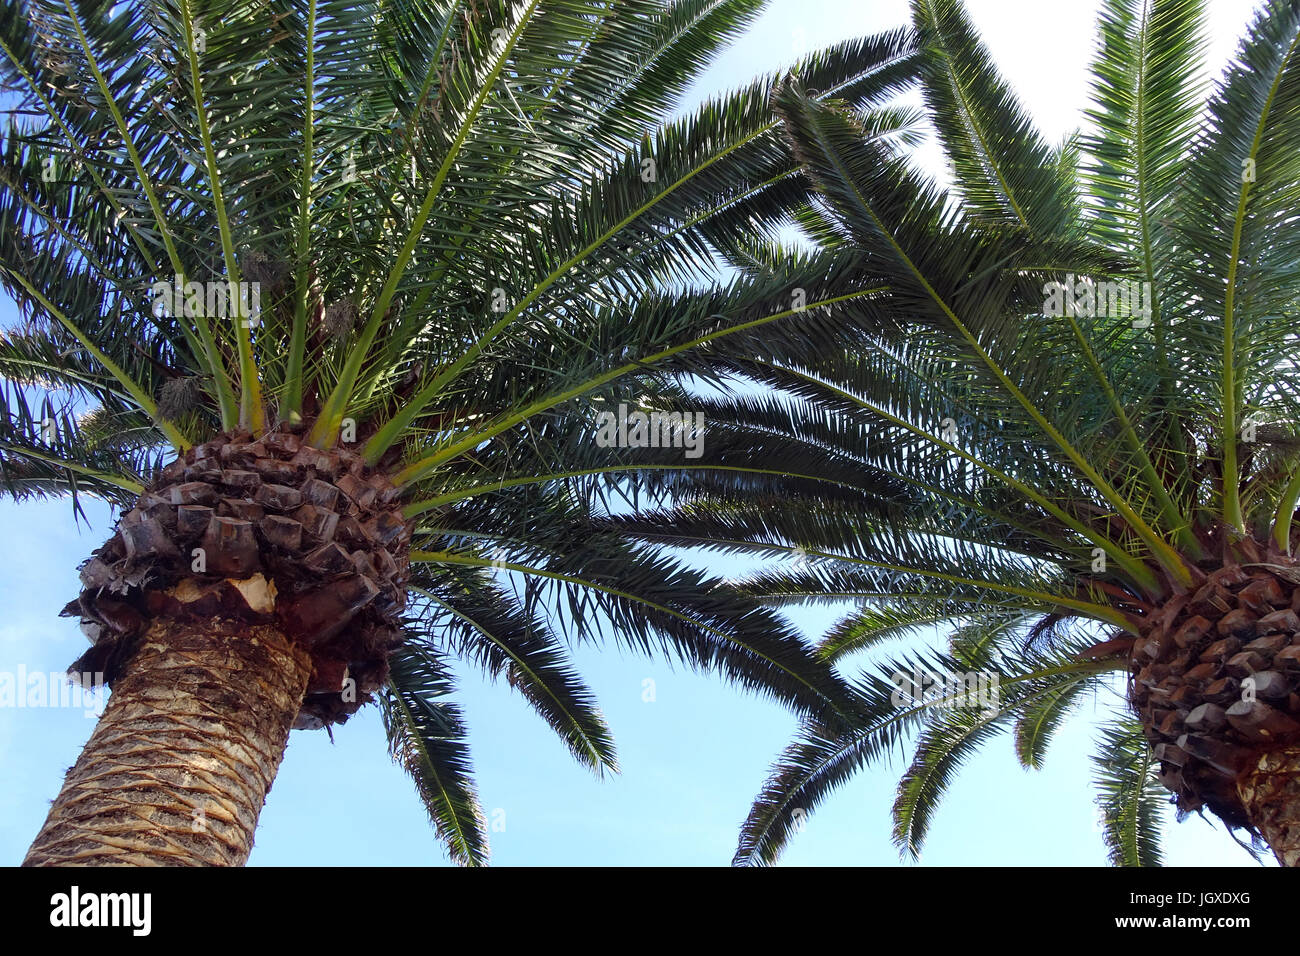 Palmen in Tiagua, Gemeinde Teguise, Lanzarote, Kanarische Inseln, Europa | Palm trees at Tiagua, province Teguise, Lanzarote, Canary islands, Europe Stock Photo